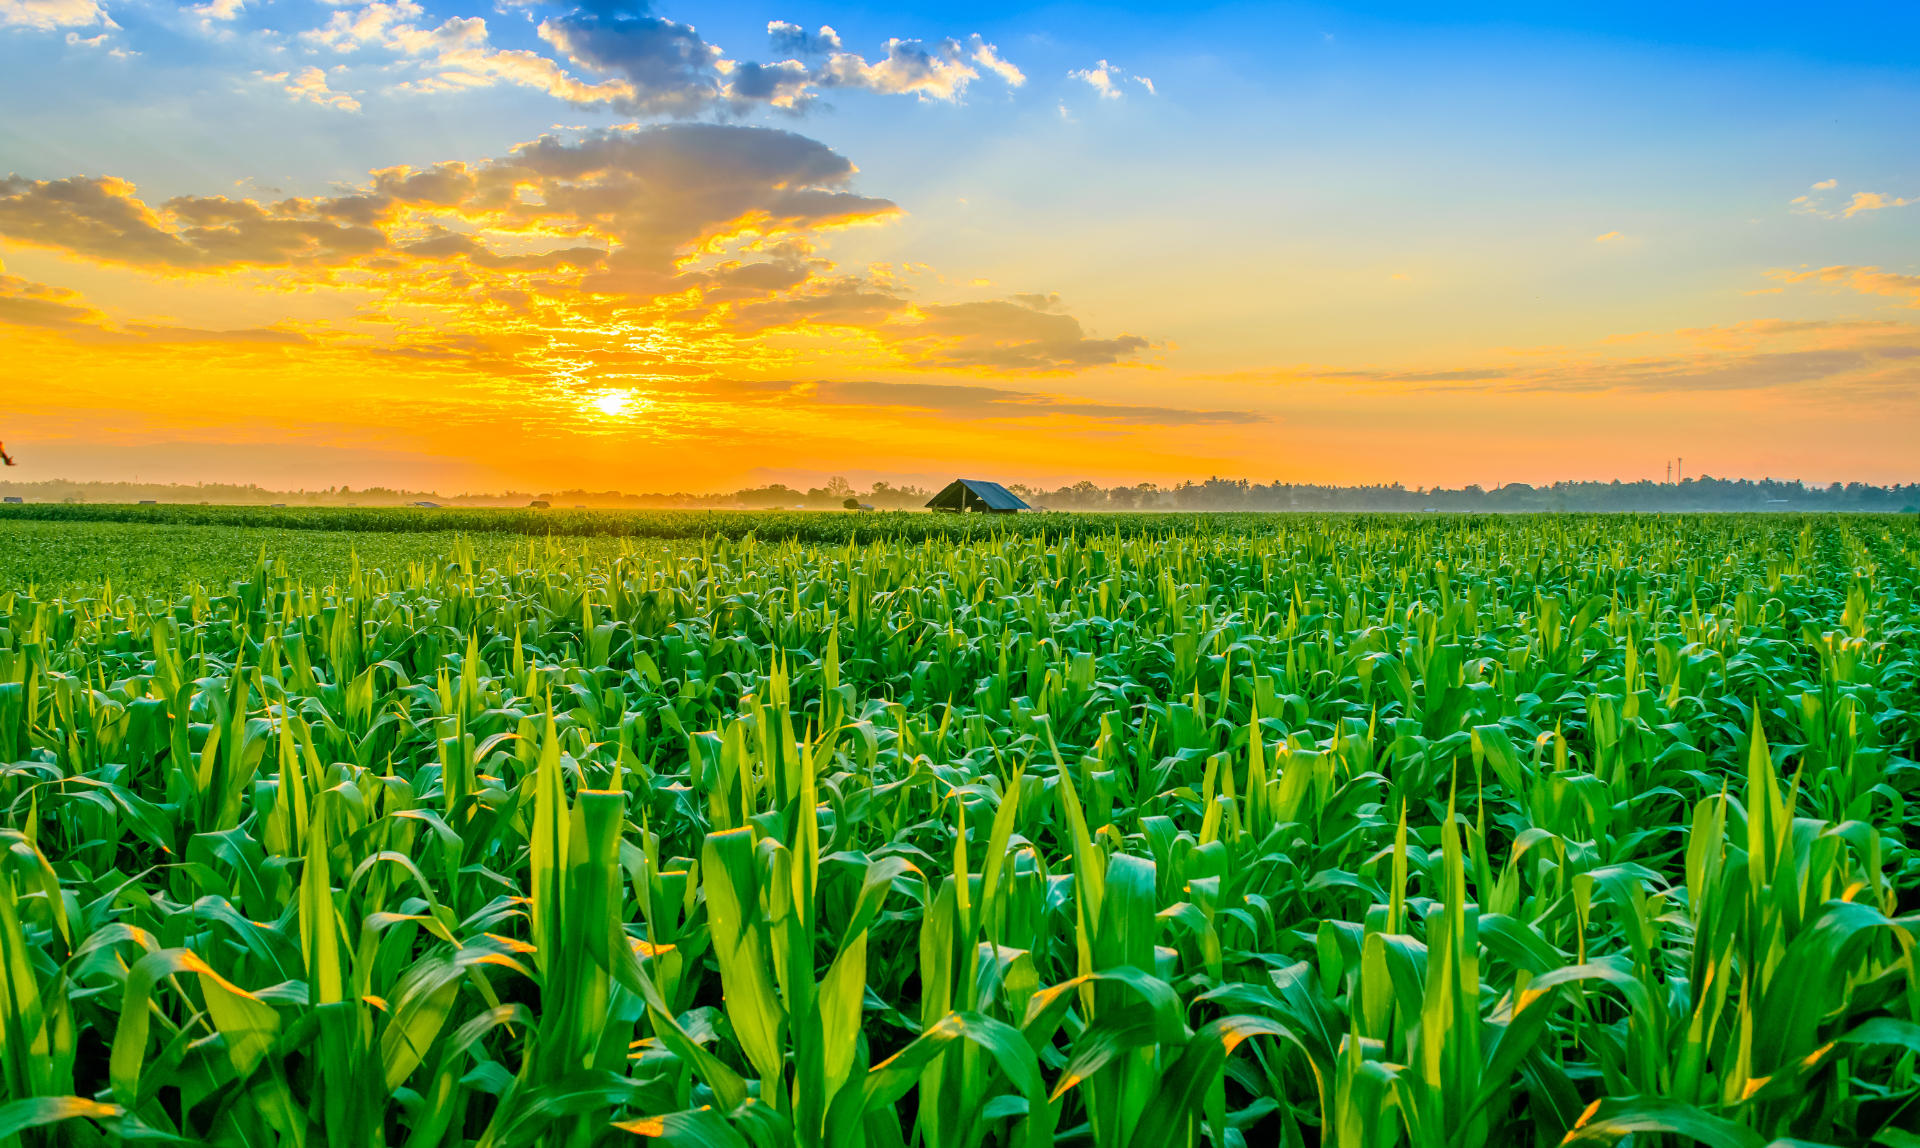 Ecolife – 100% natural litter made of corn